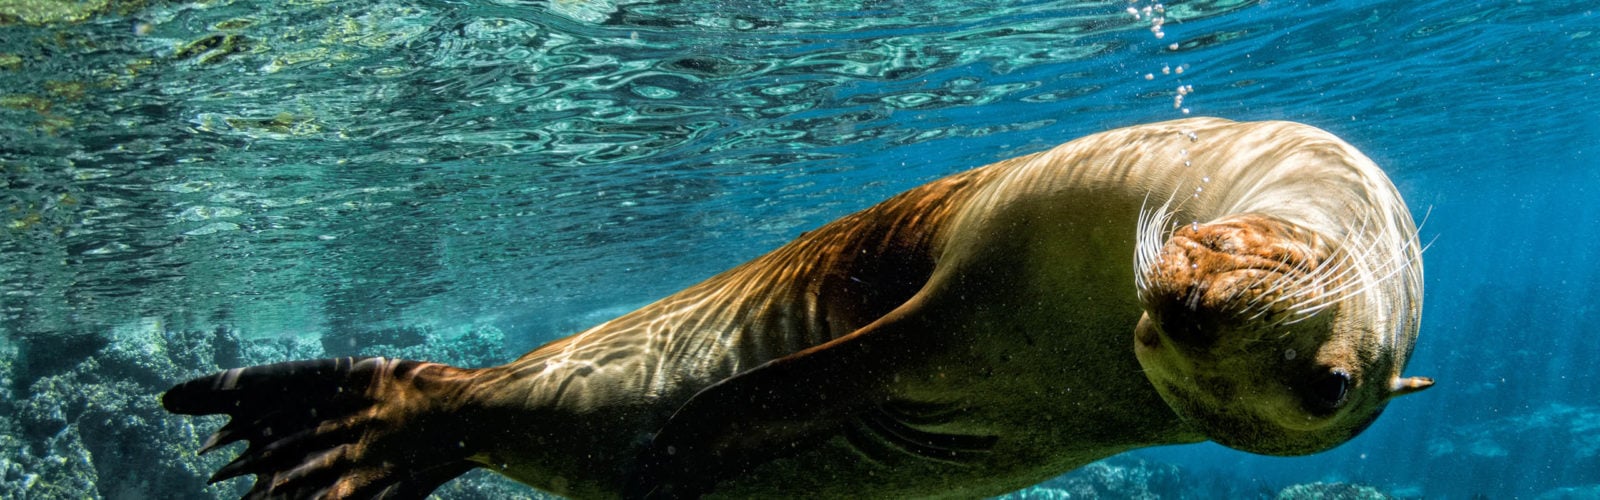 seao-lion-swimming-underwater-galapagos